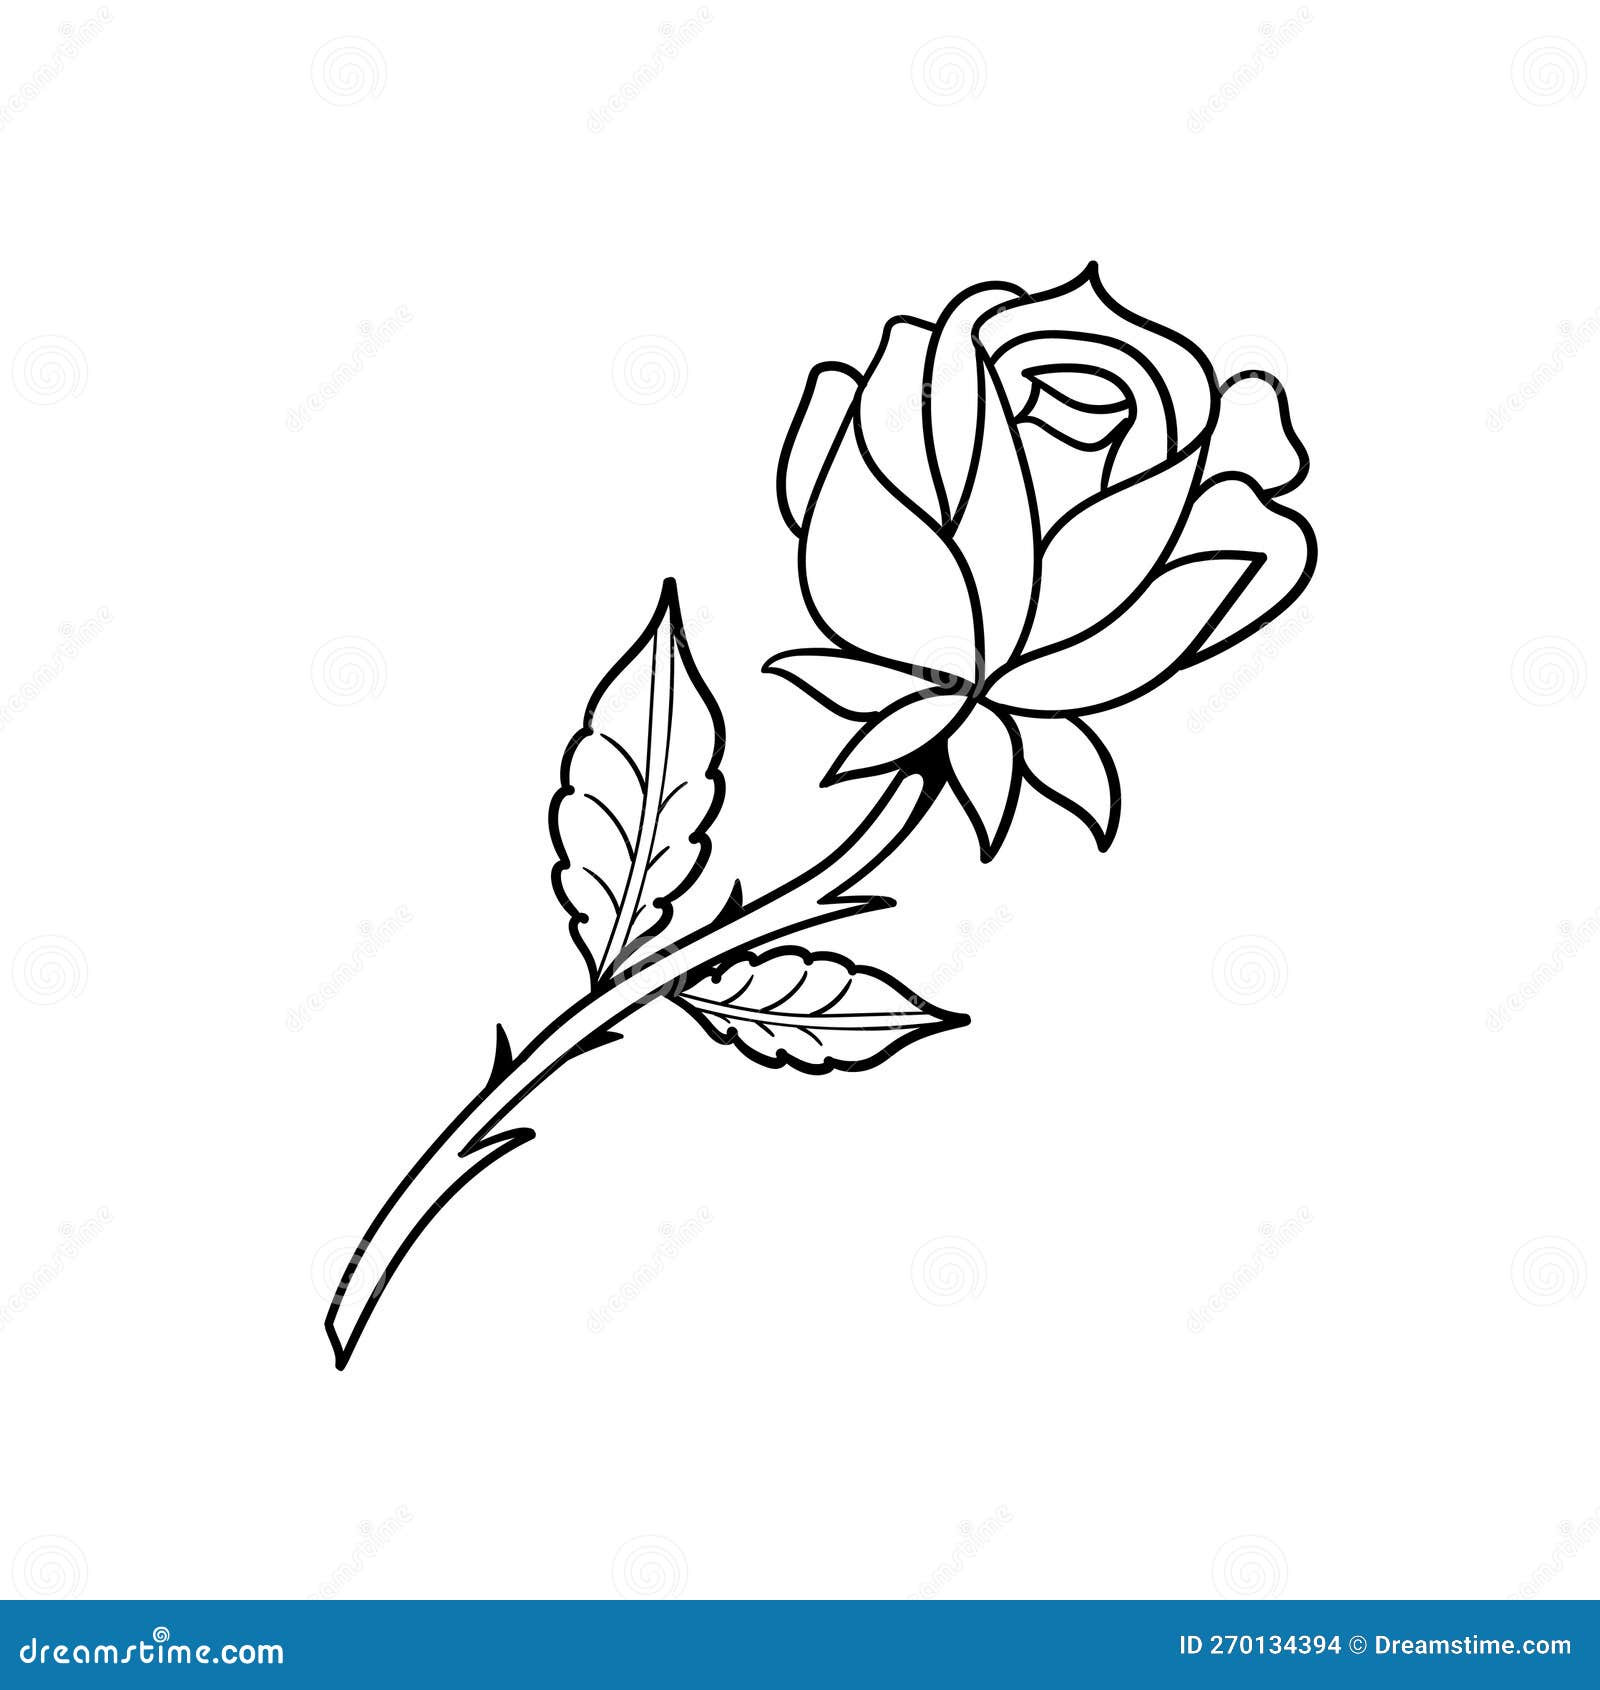 Just a sketchy hand tatty for Heather. . . . #rose #rosetattoo #handtattoo  #sketchy #flower #traditional #illustrative #oldschool… | Instagram